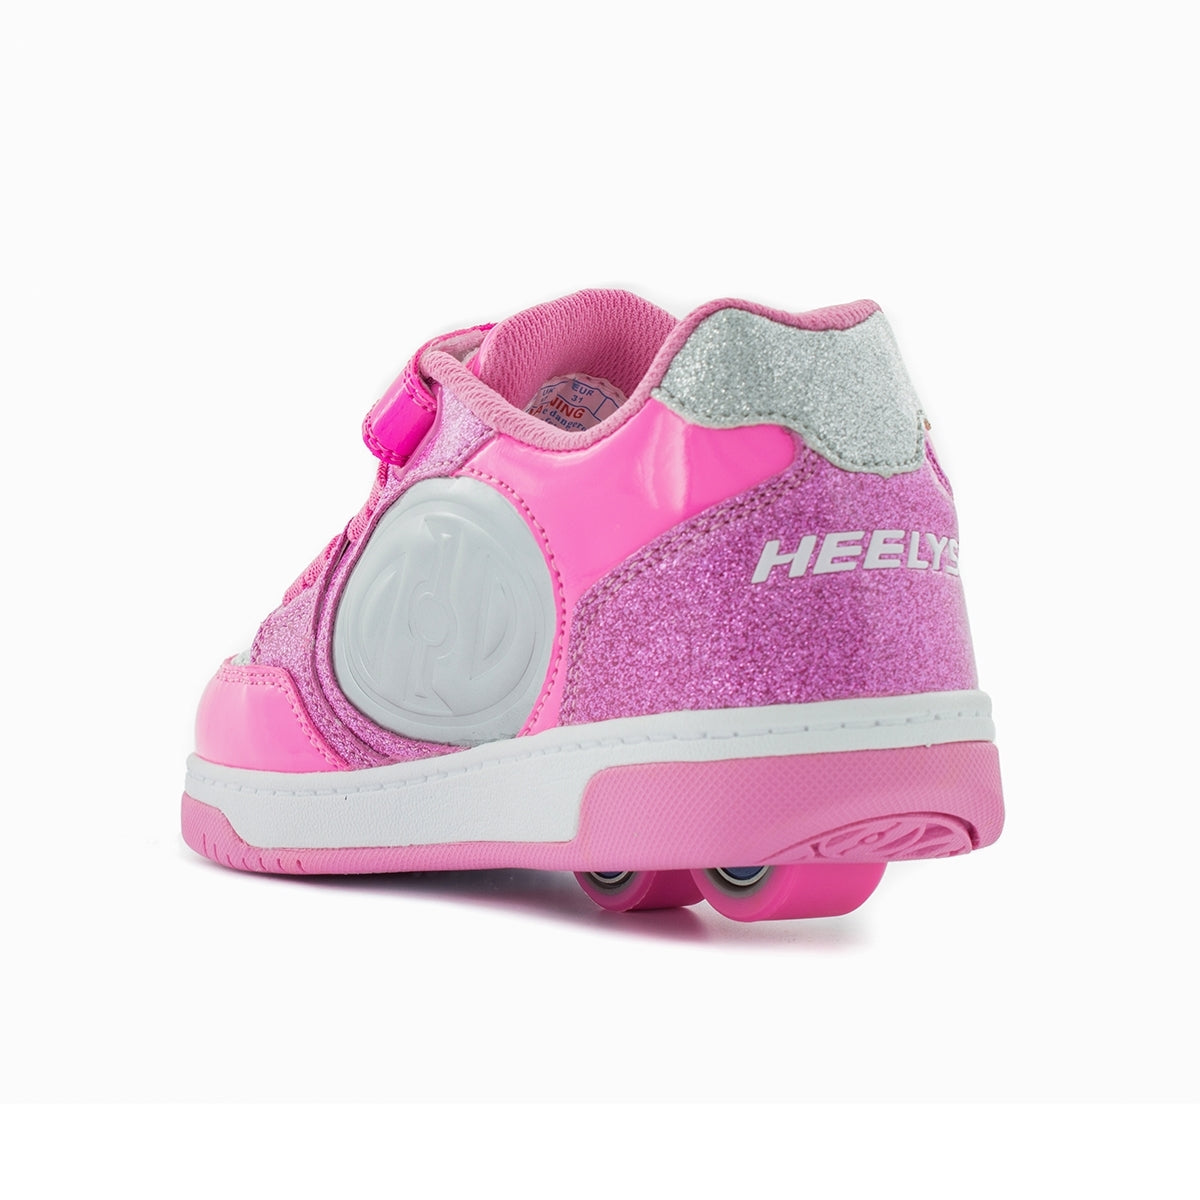 pink glitter heelys size 12